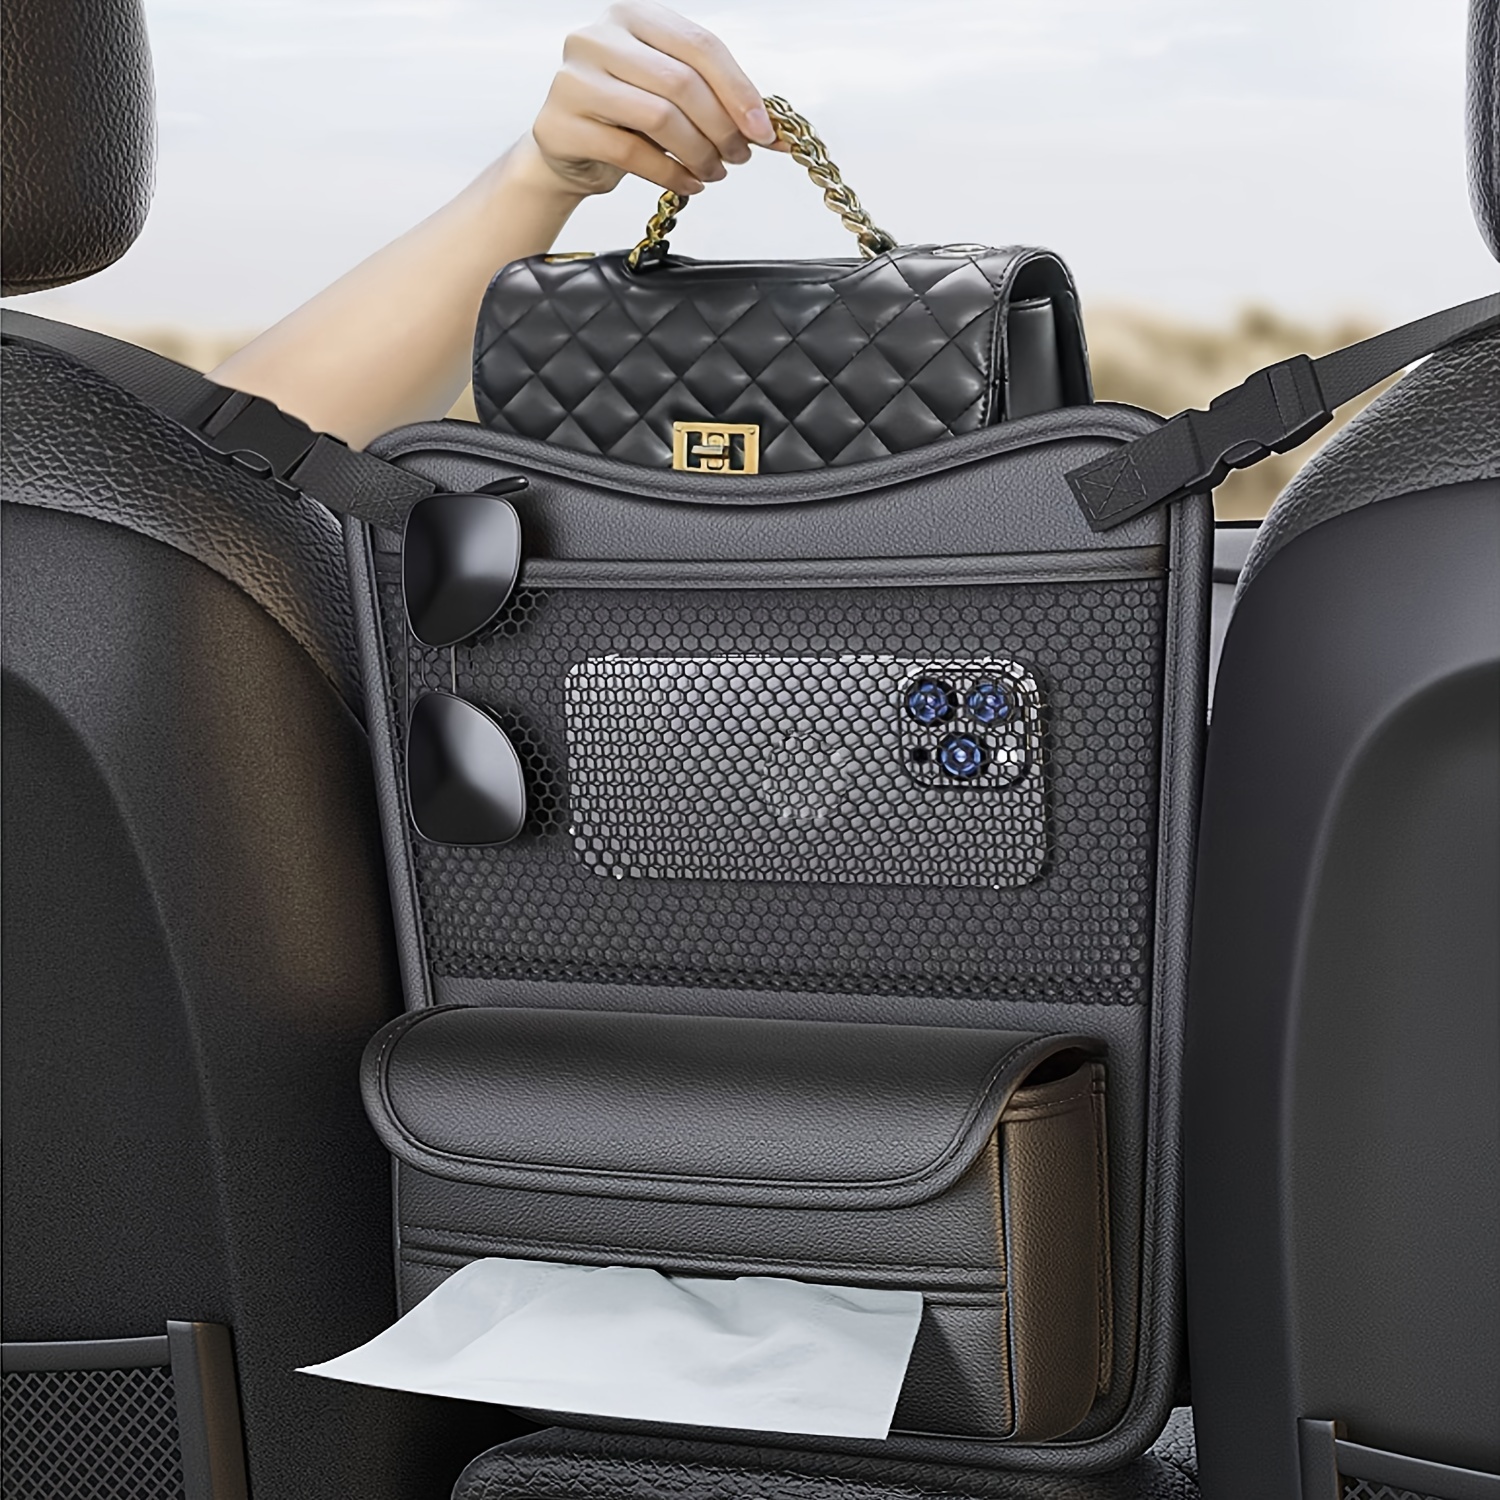 

1pc Car Storage Bag, Pu Leather Car Seat Back Middle Organizer Storage Bag, Car Net Pocket Handbag Holder Seat Middle Box